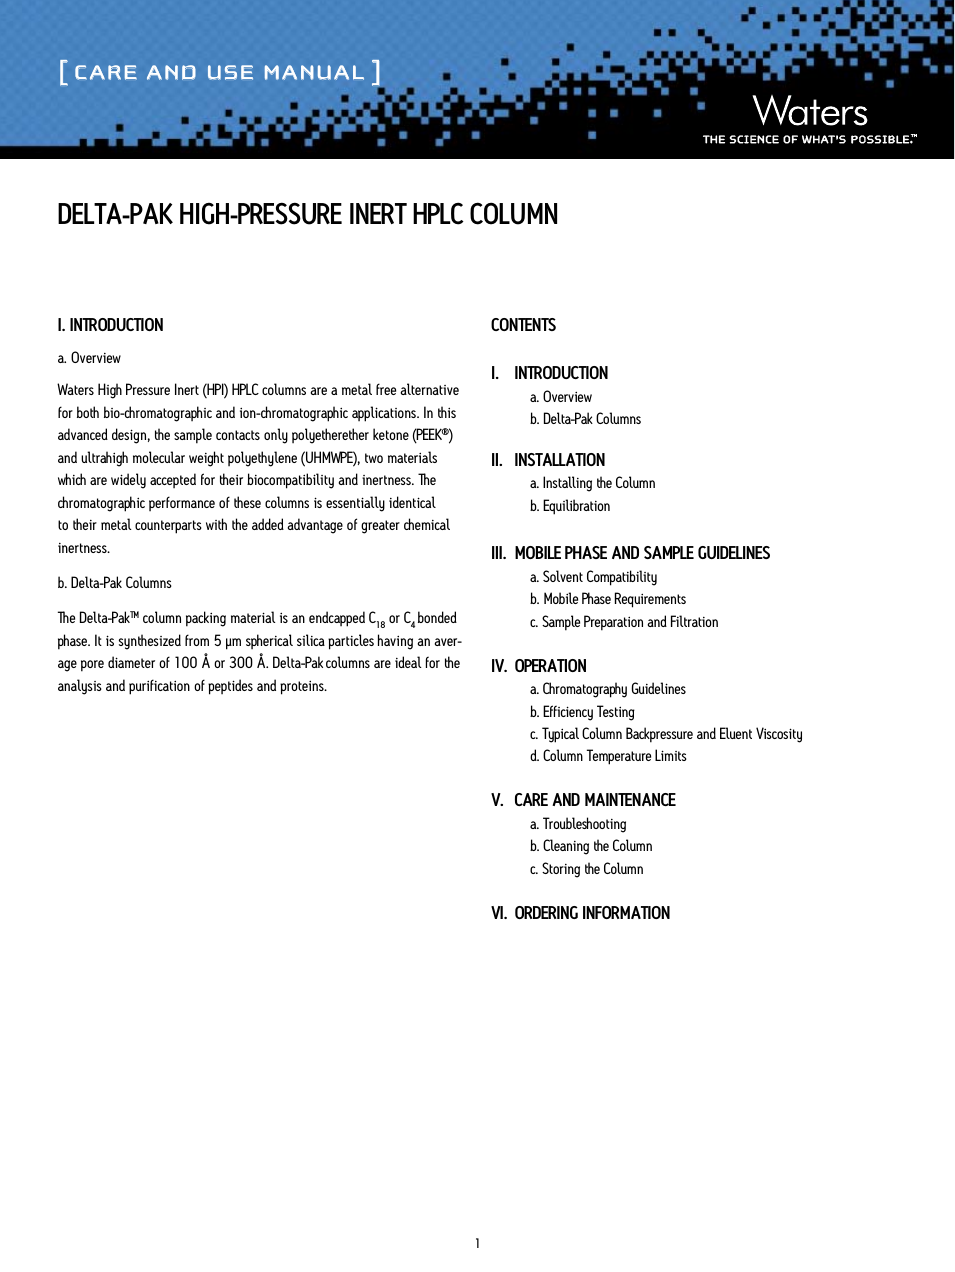 Delta-Pak High Pressure Insert HPLC Column